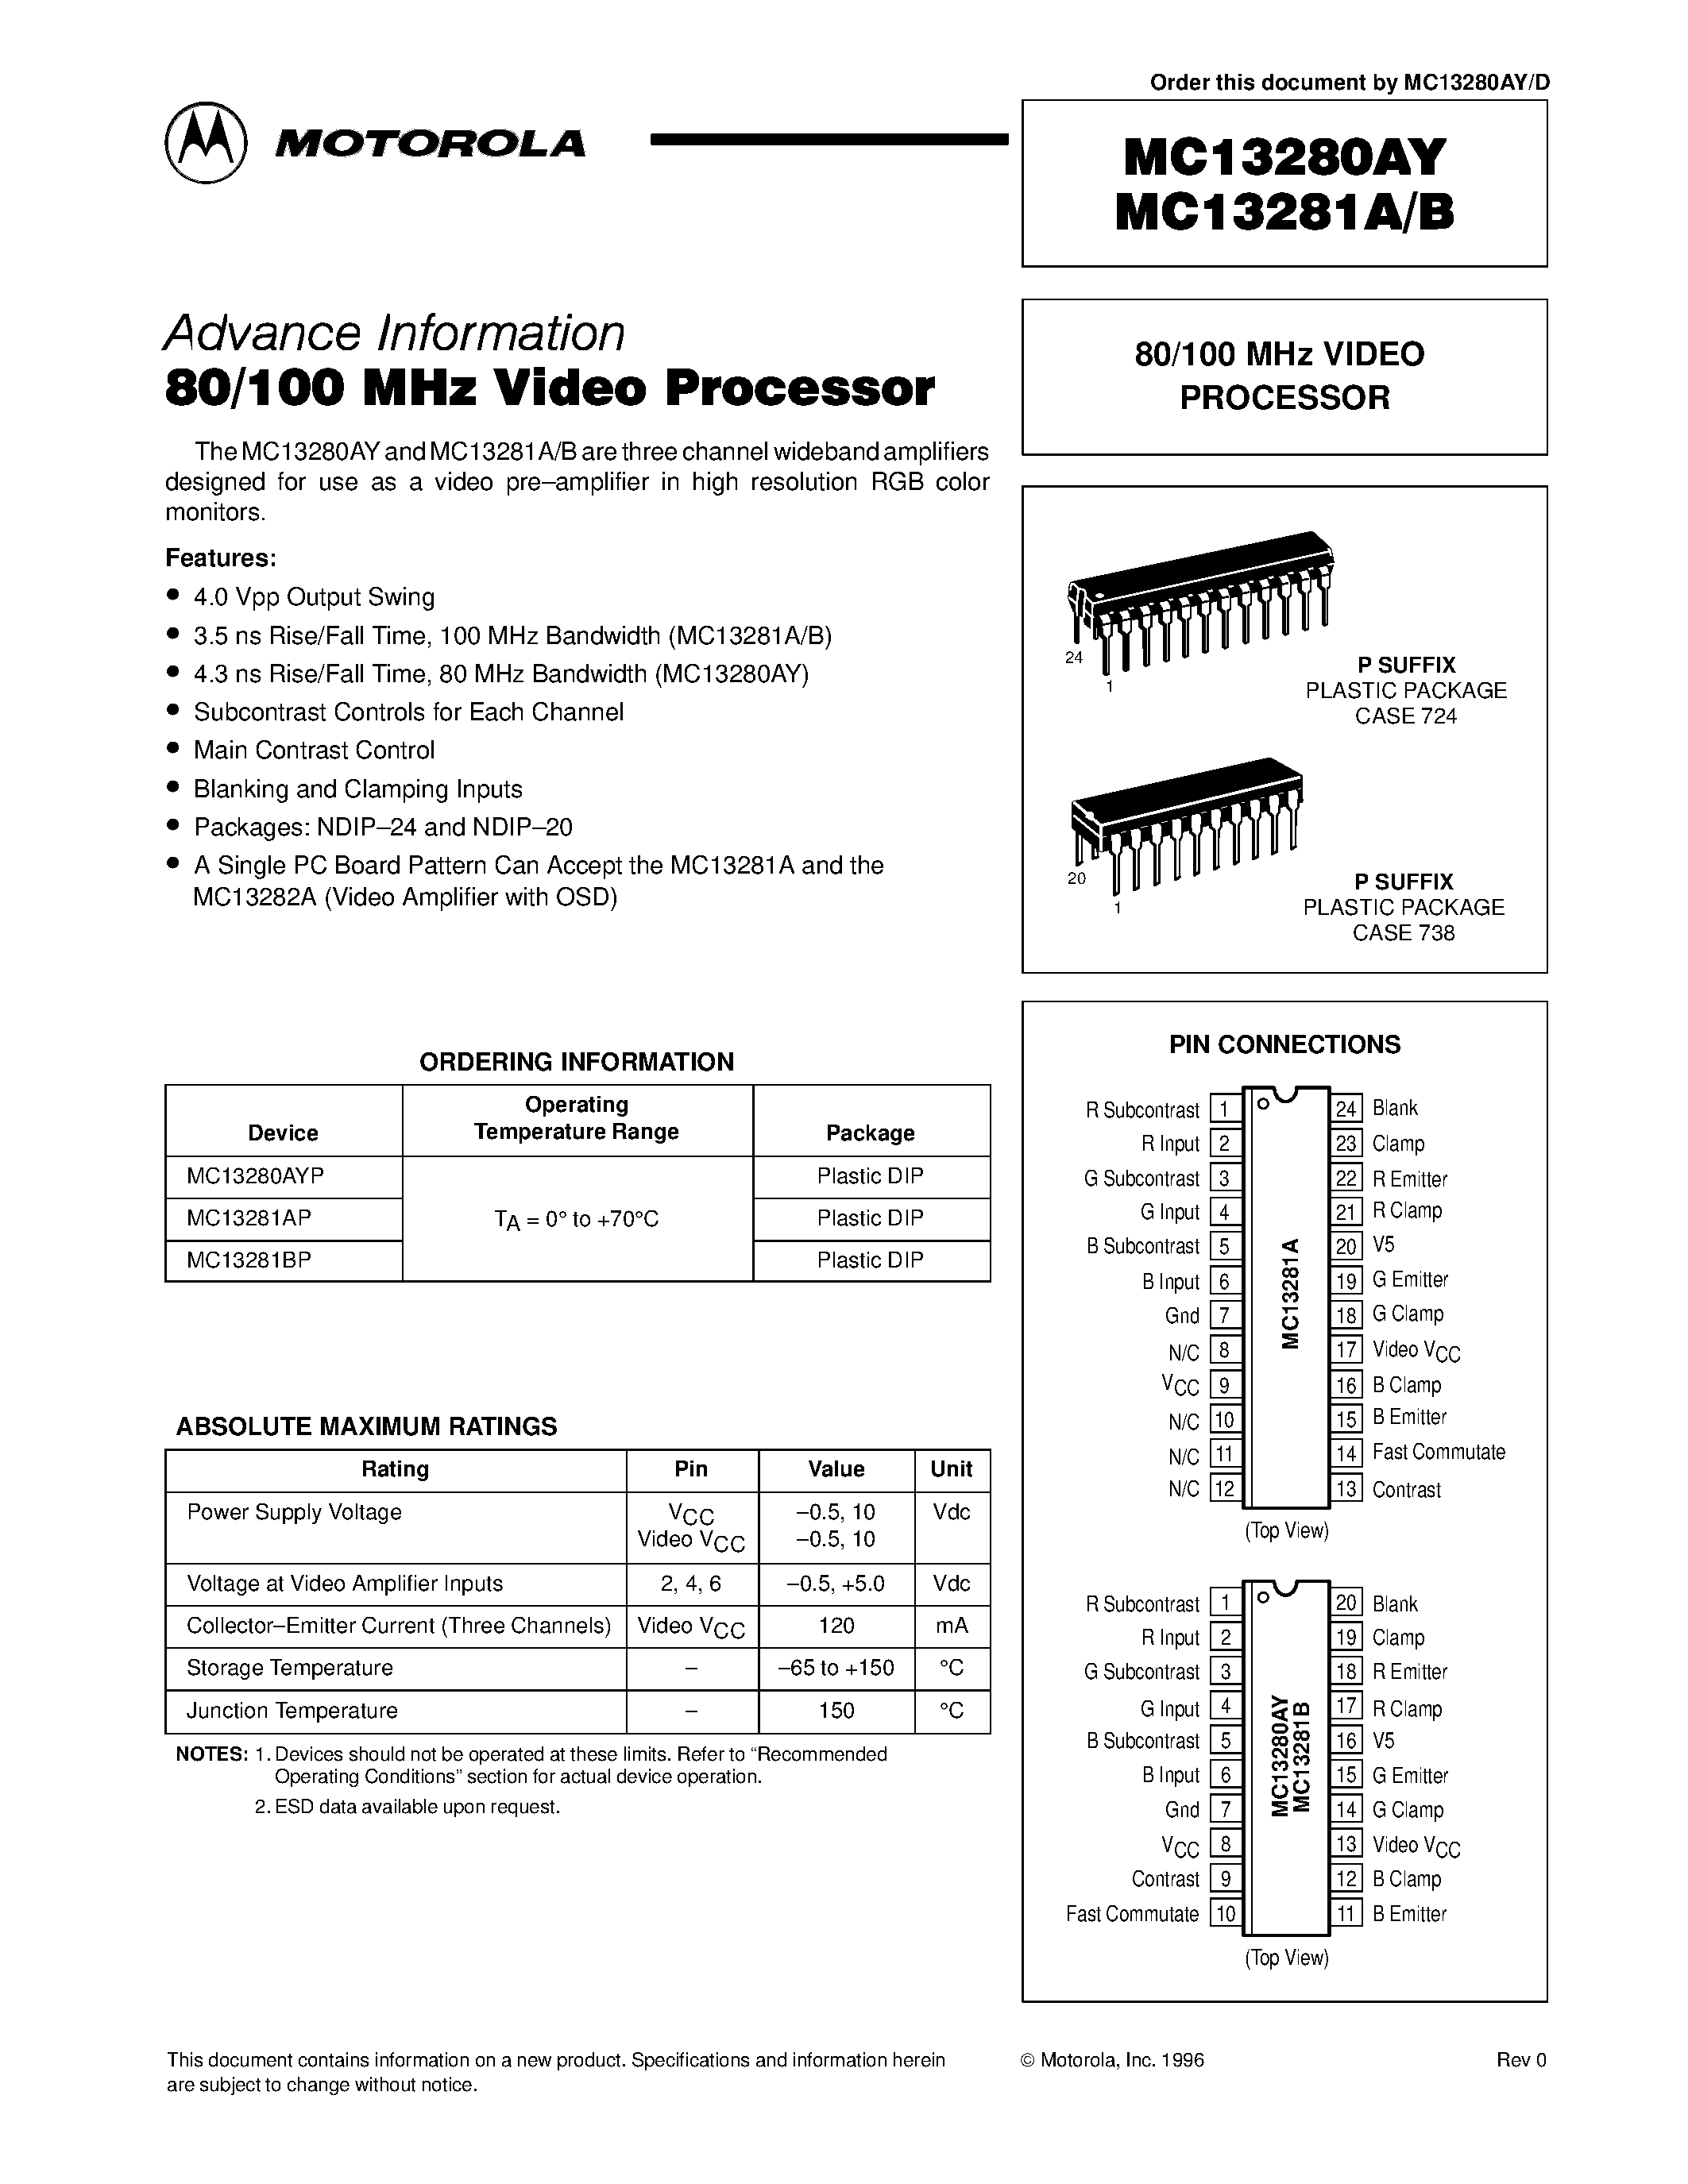 Даташит MC13280AYP - 80/100 MHz VIDEO PROCESSOR страница 1